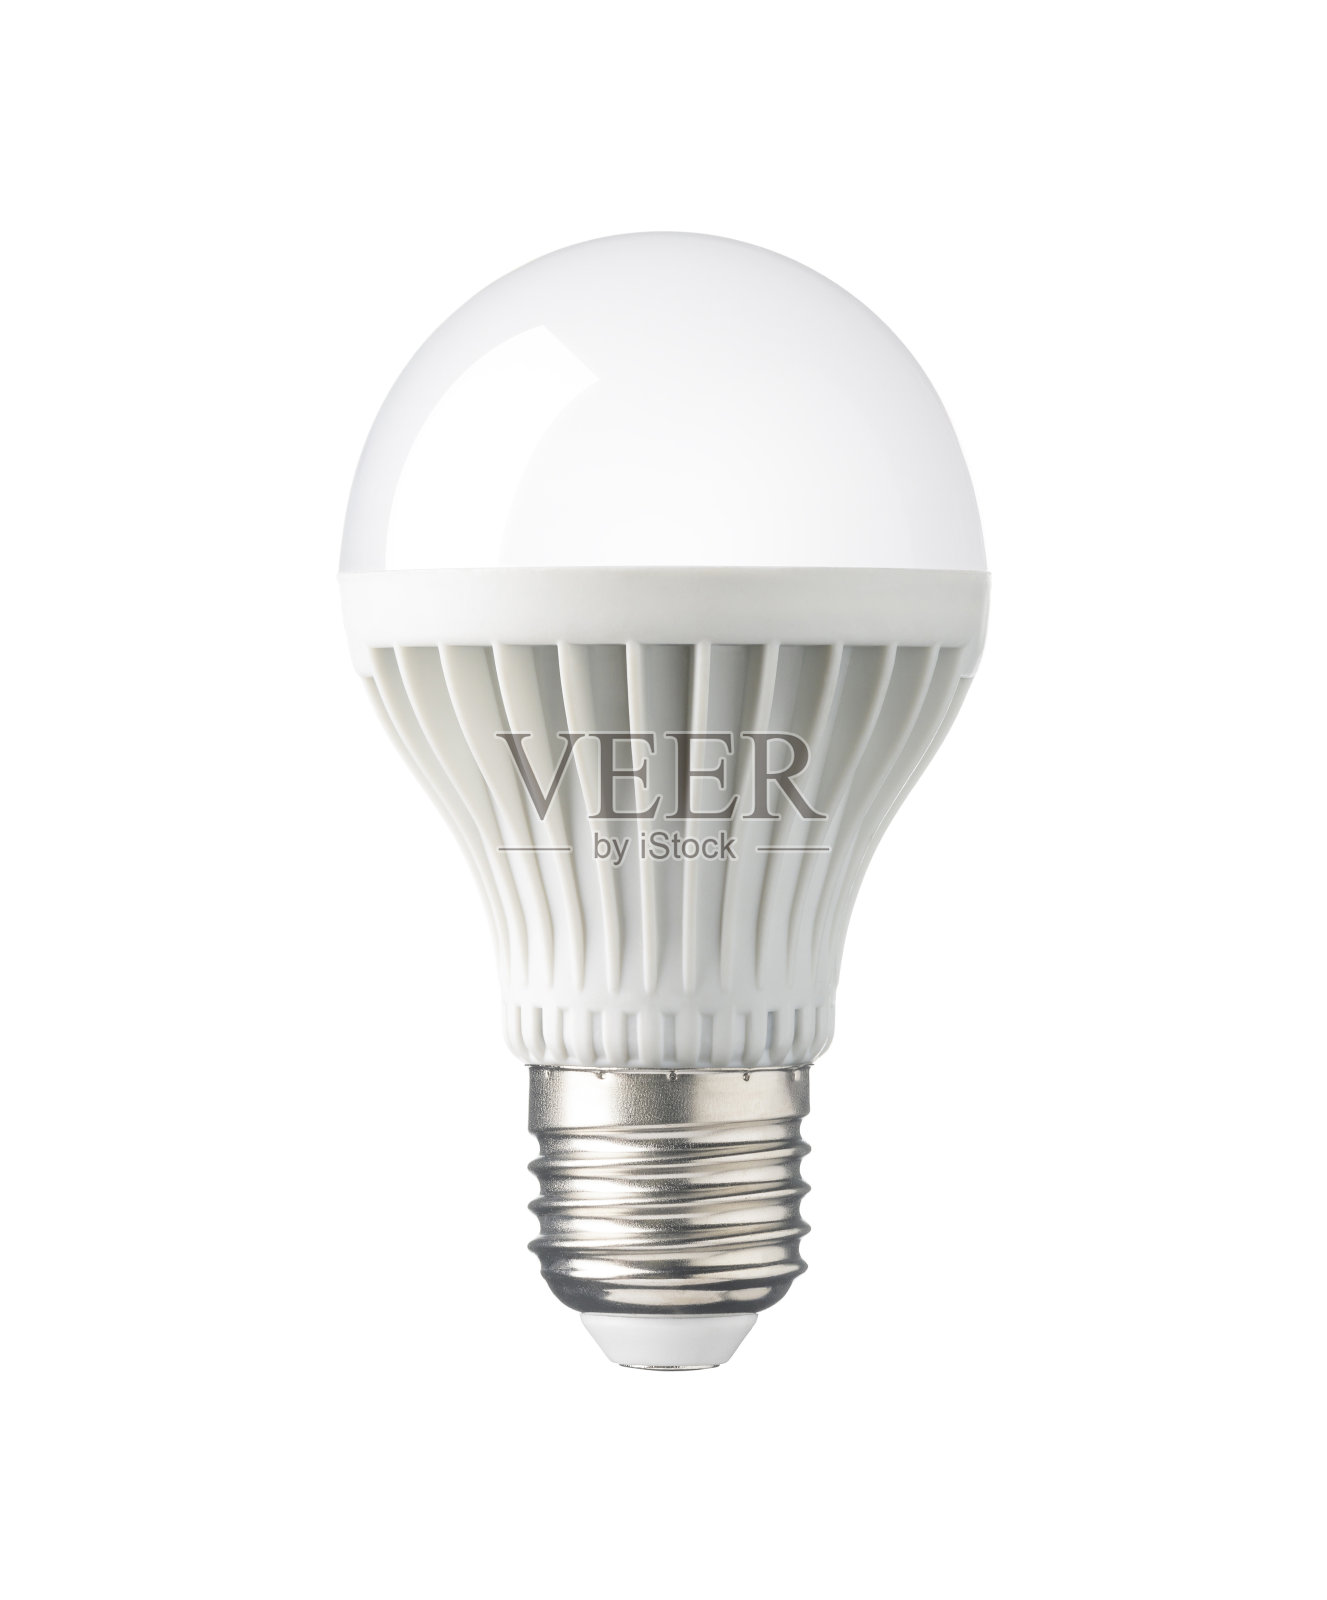 LED灯泡，节能环保的技术电灯照片摄影图片